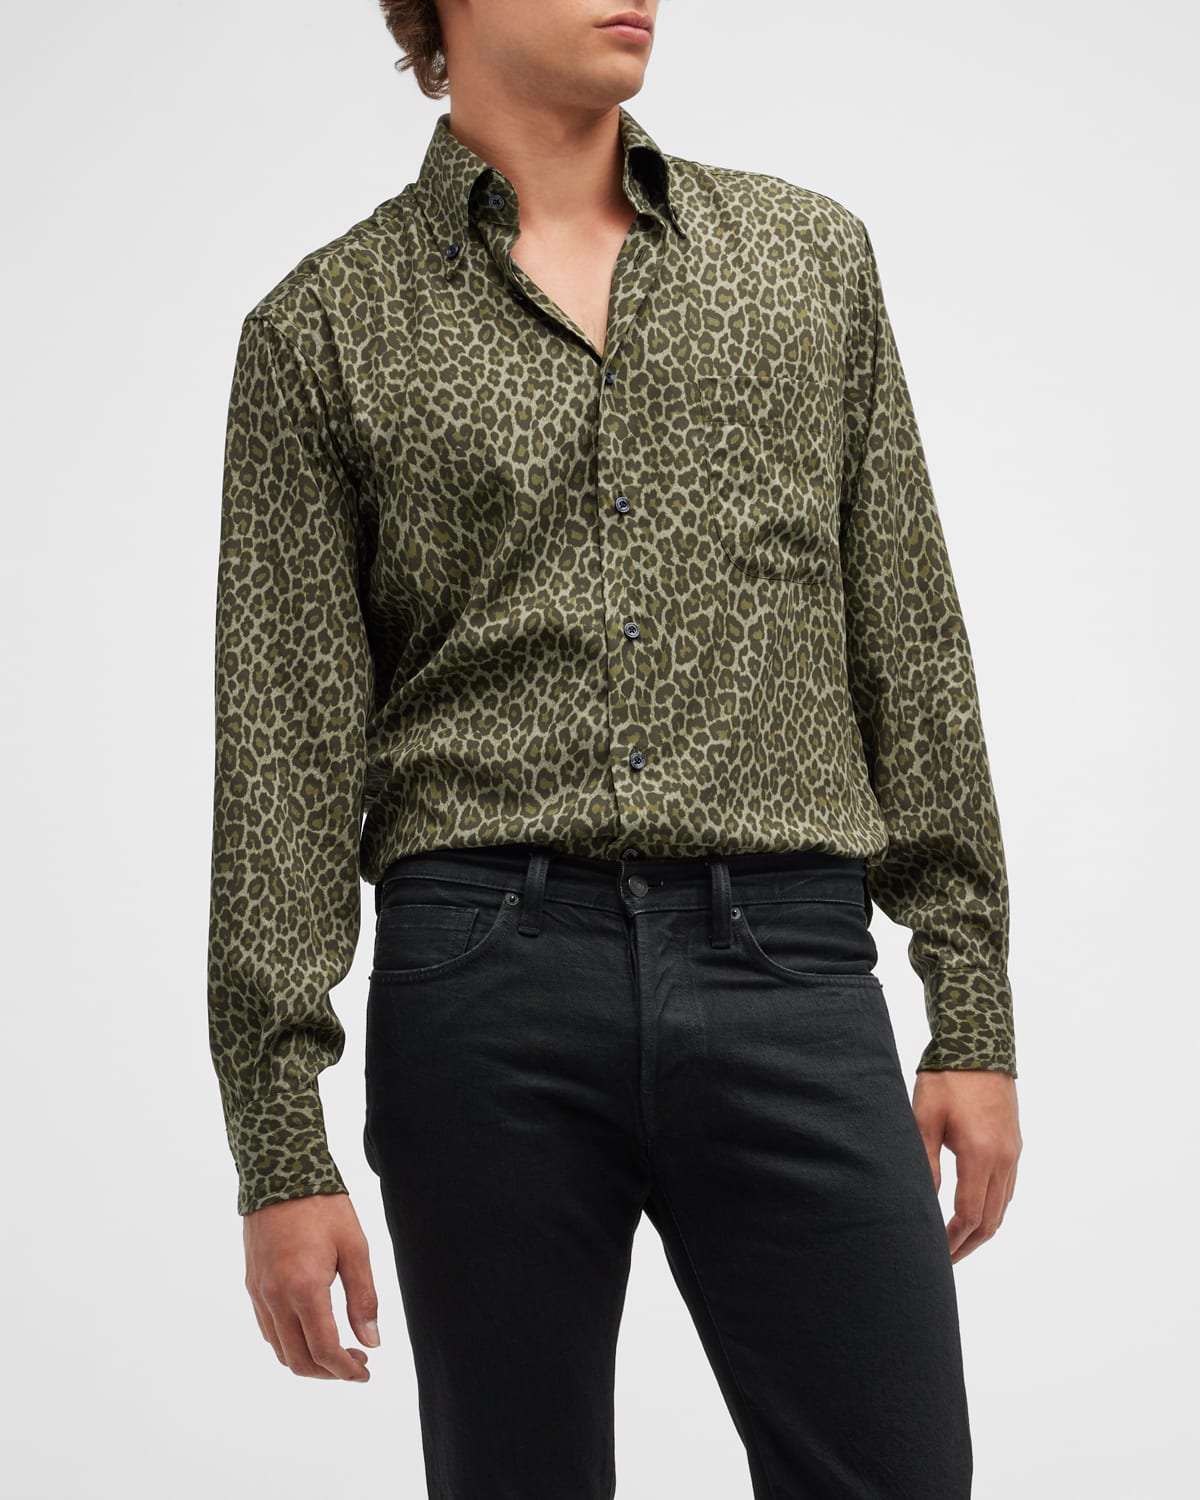 TOM FORD Men's Leopard-Print Dress Shirt | Smart Closet